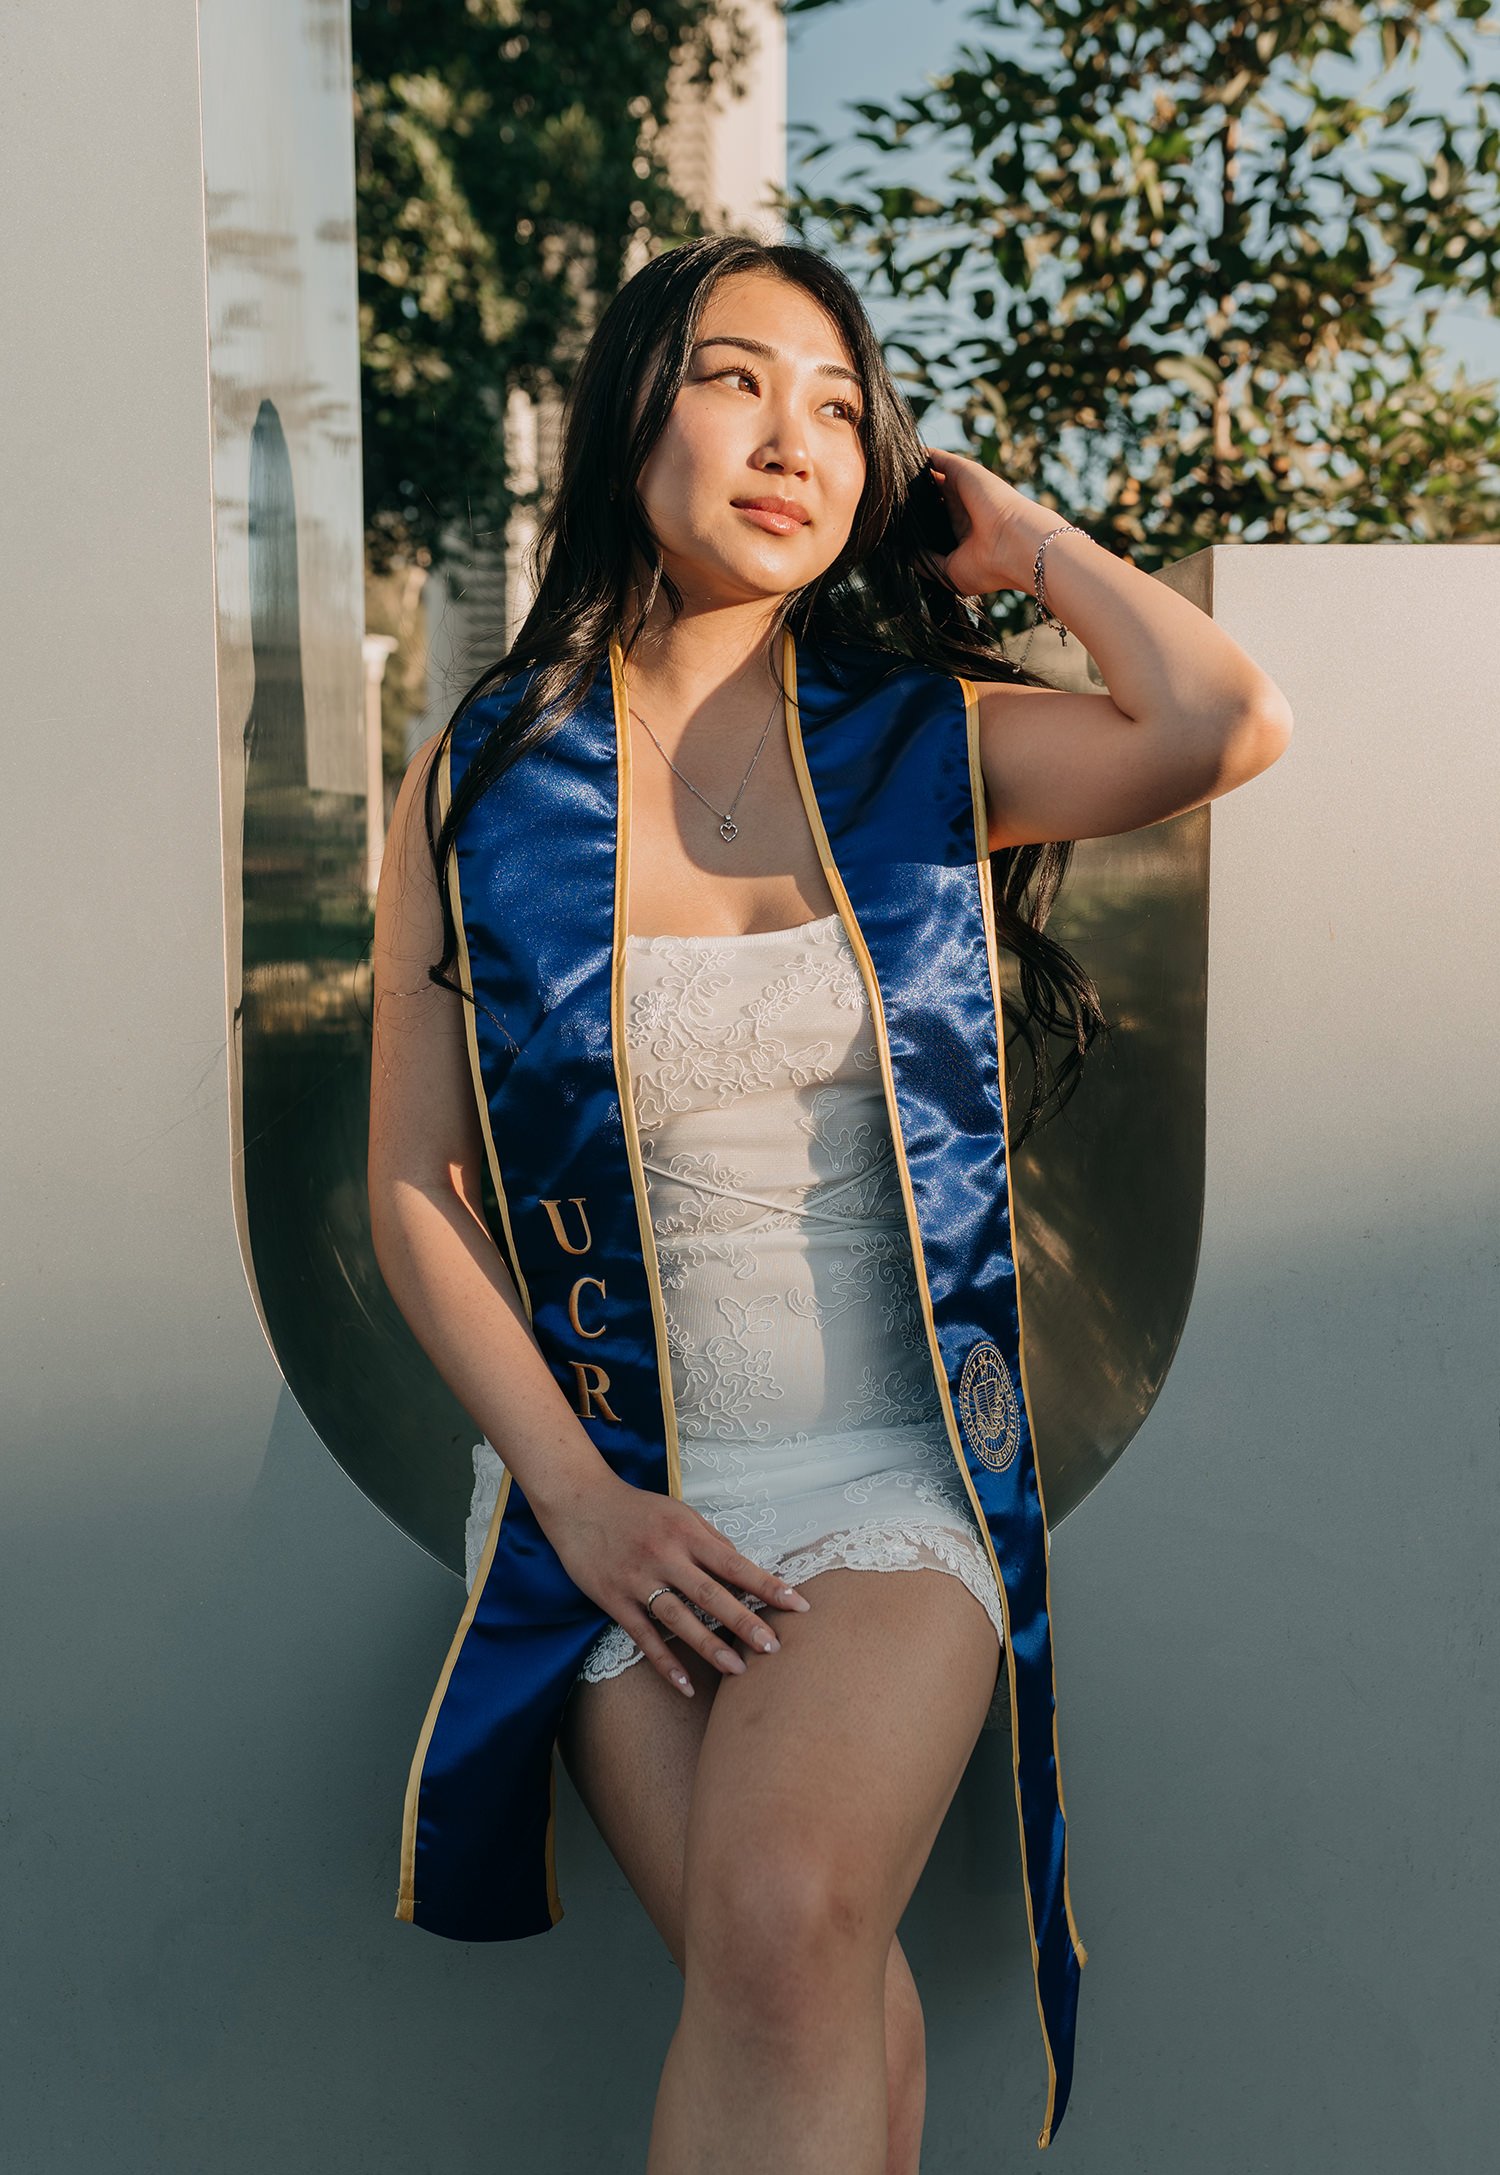 ucr-graduation-portrait-riverside-california-photographer-14.jpg